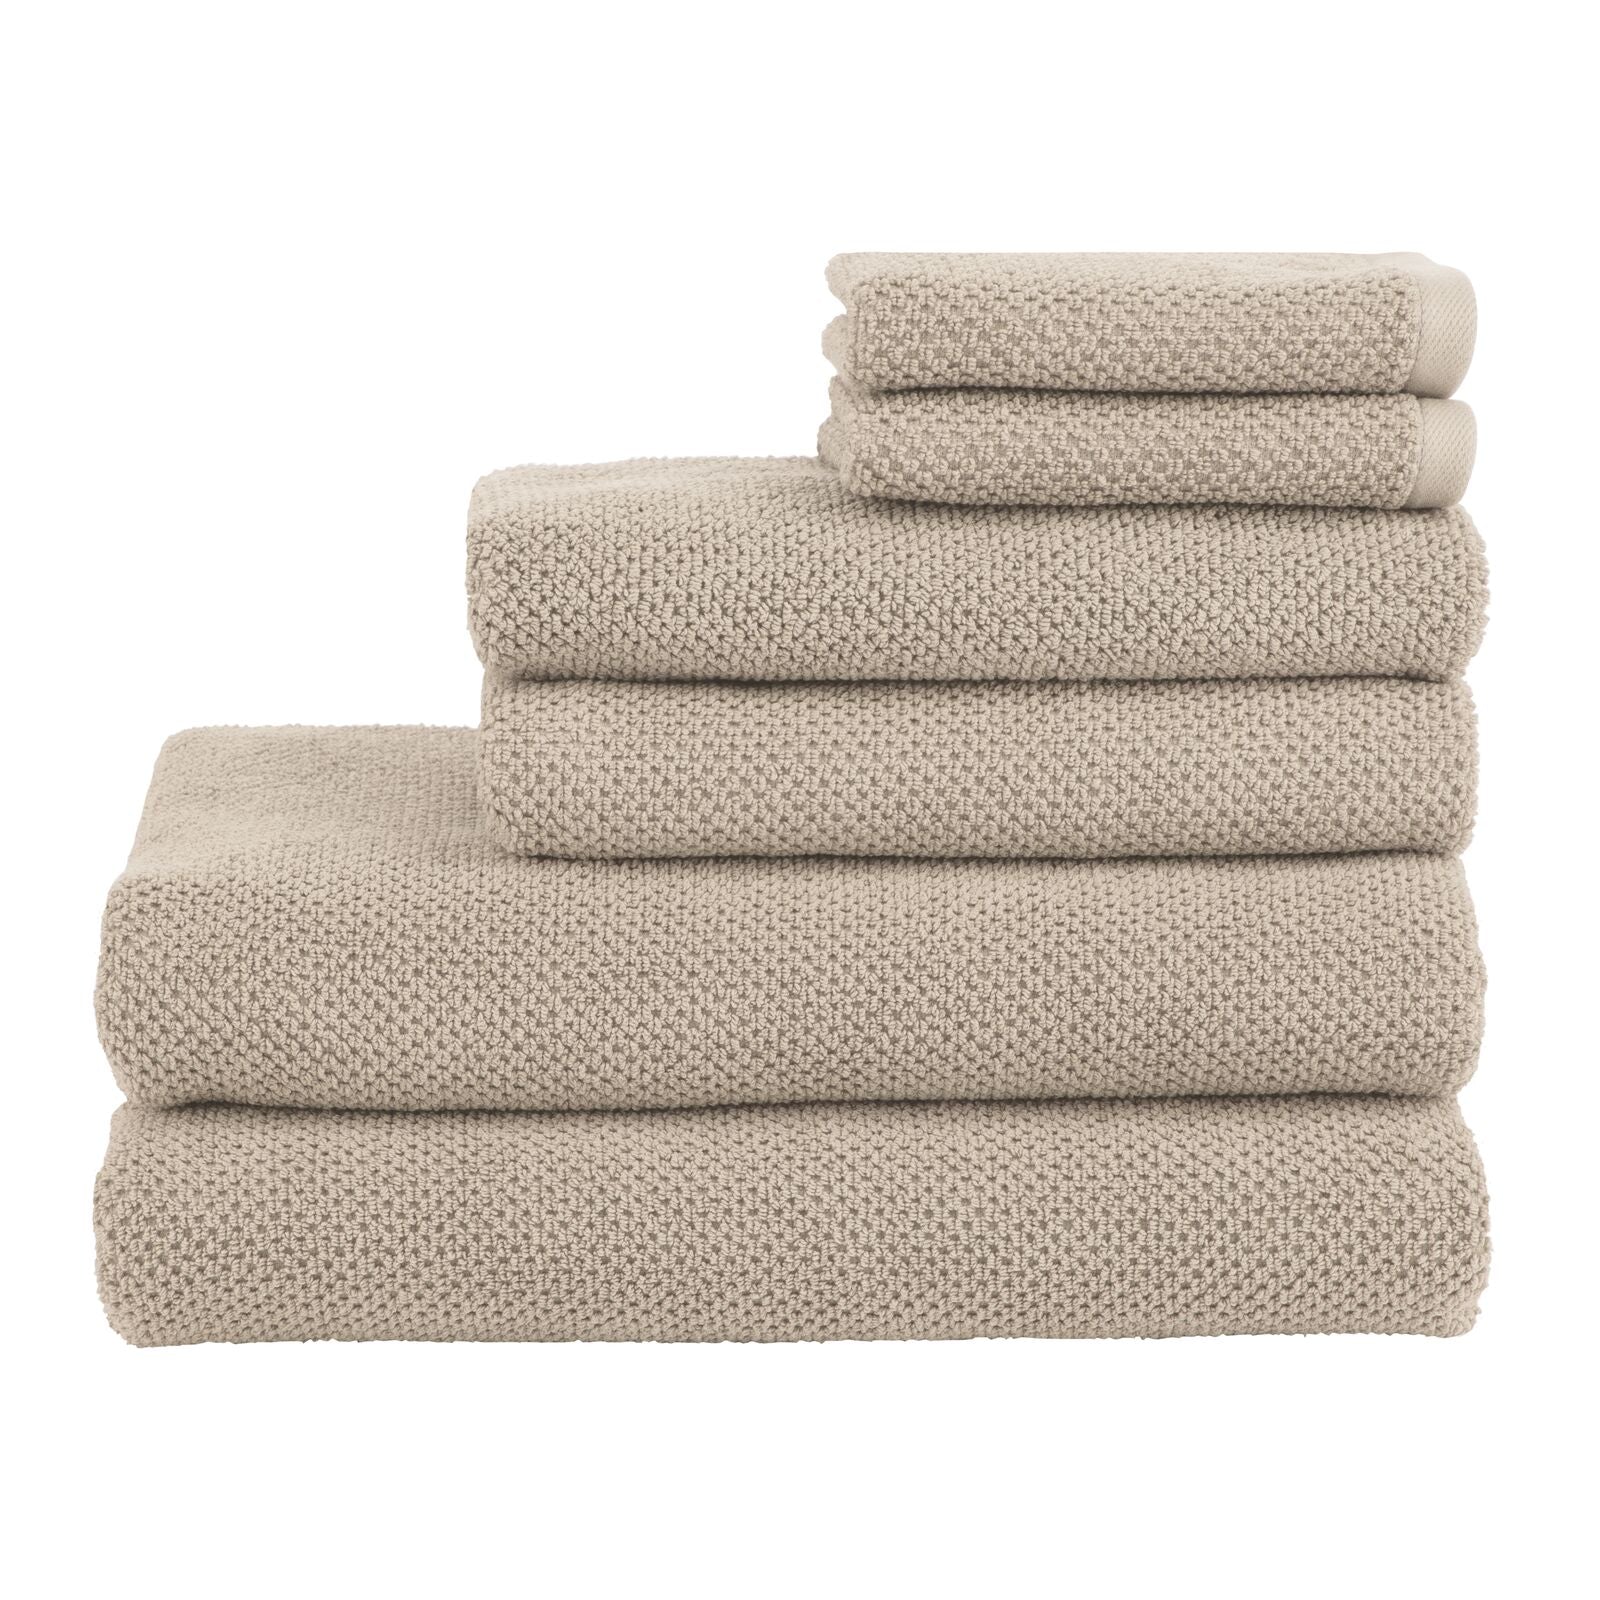 Senses Textured Rice Weave 6 Piece Bathroom Towel Set (Navy